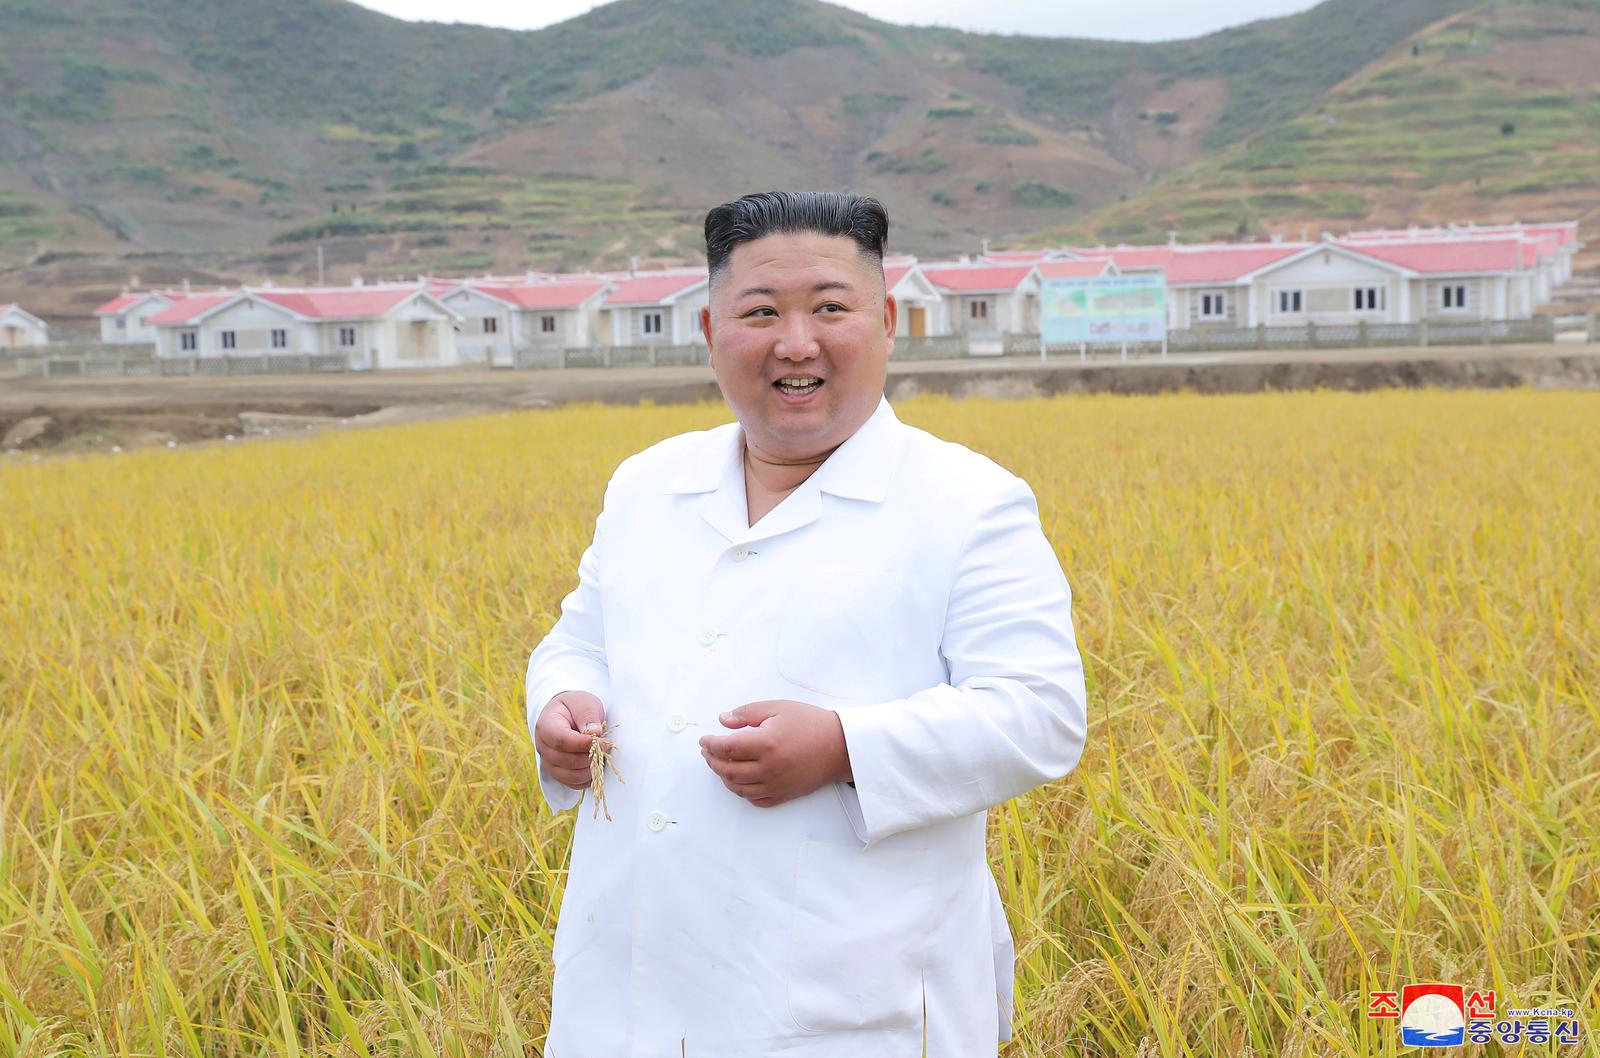 North Korea's Kim says he 'sincerely hopes' Trump recovers soon - KCNA